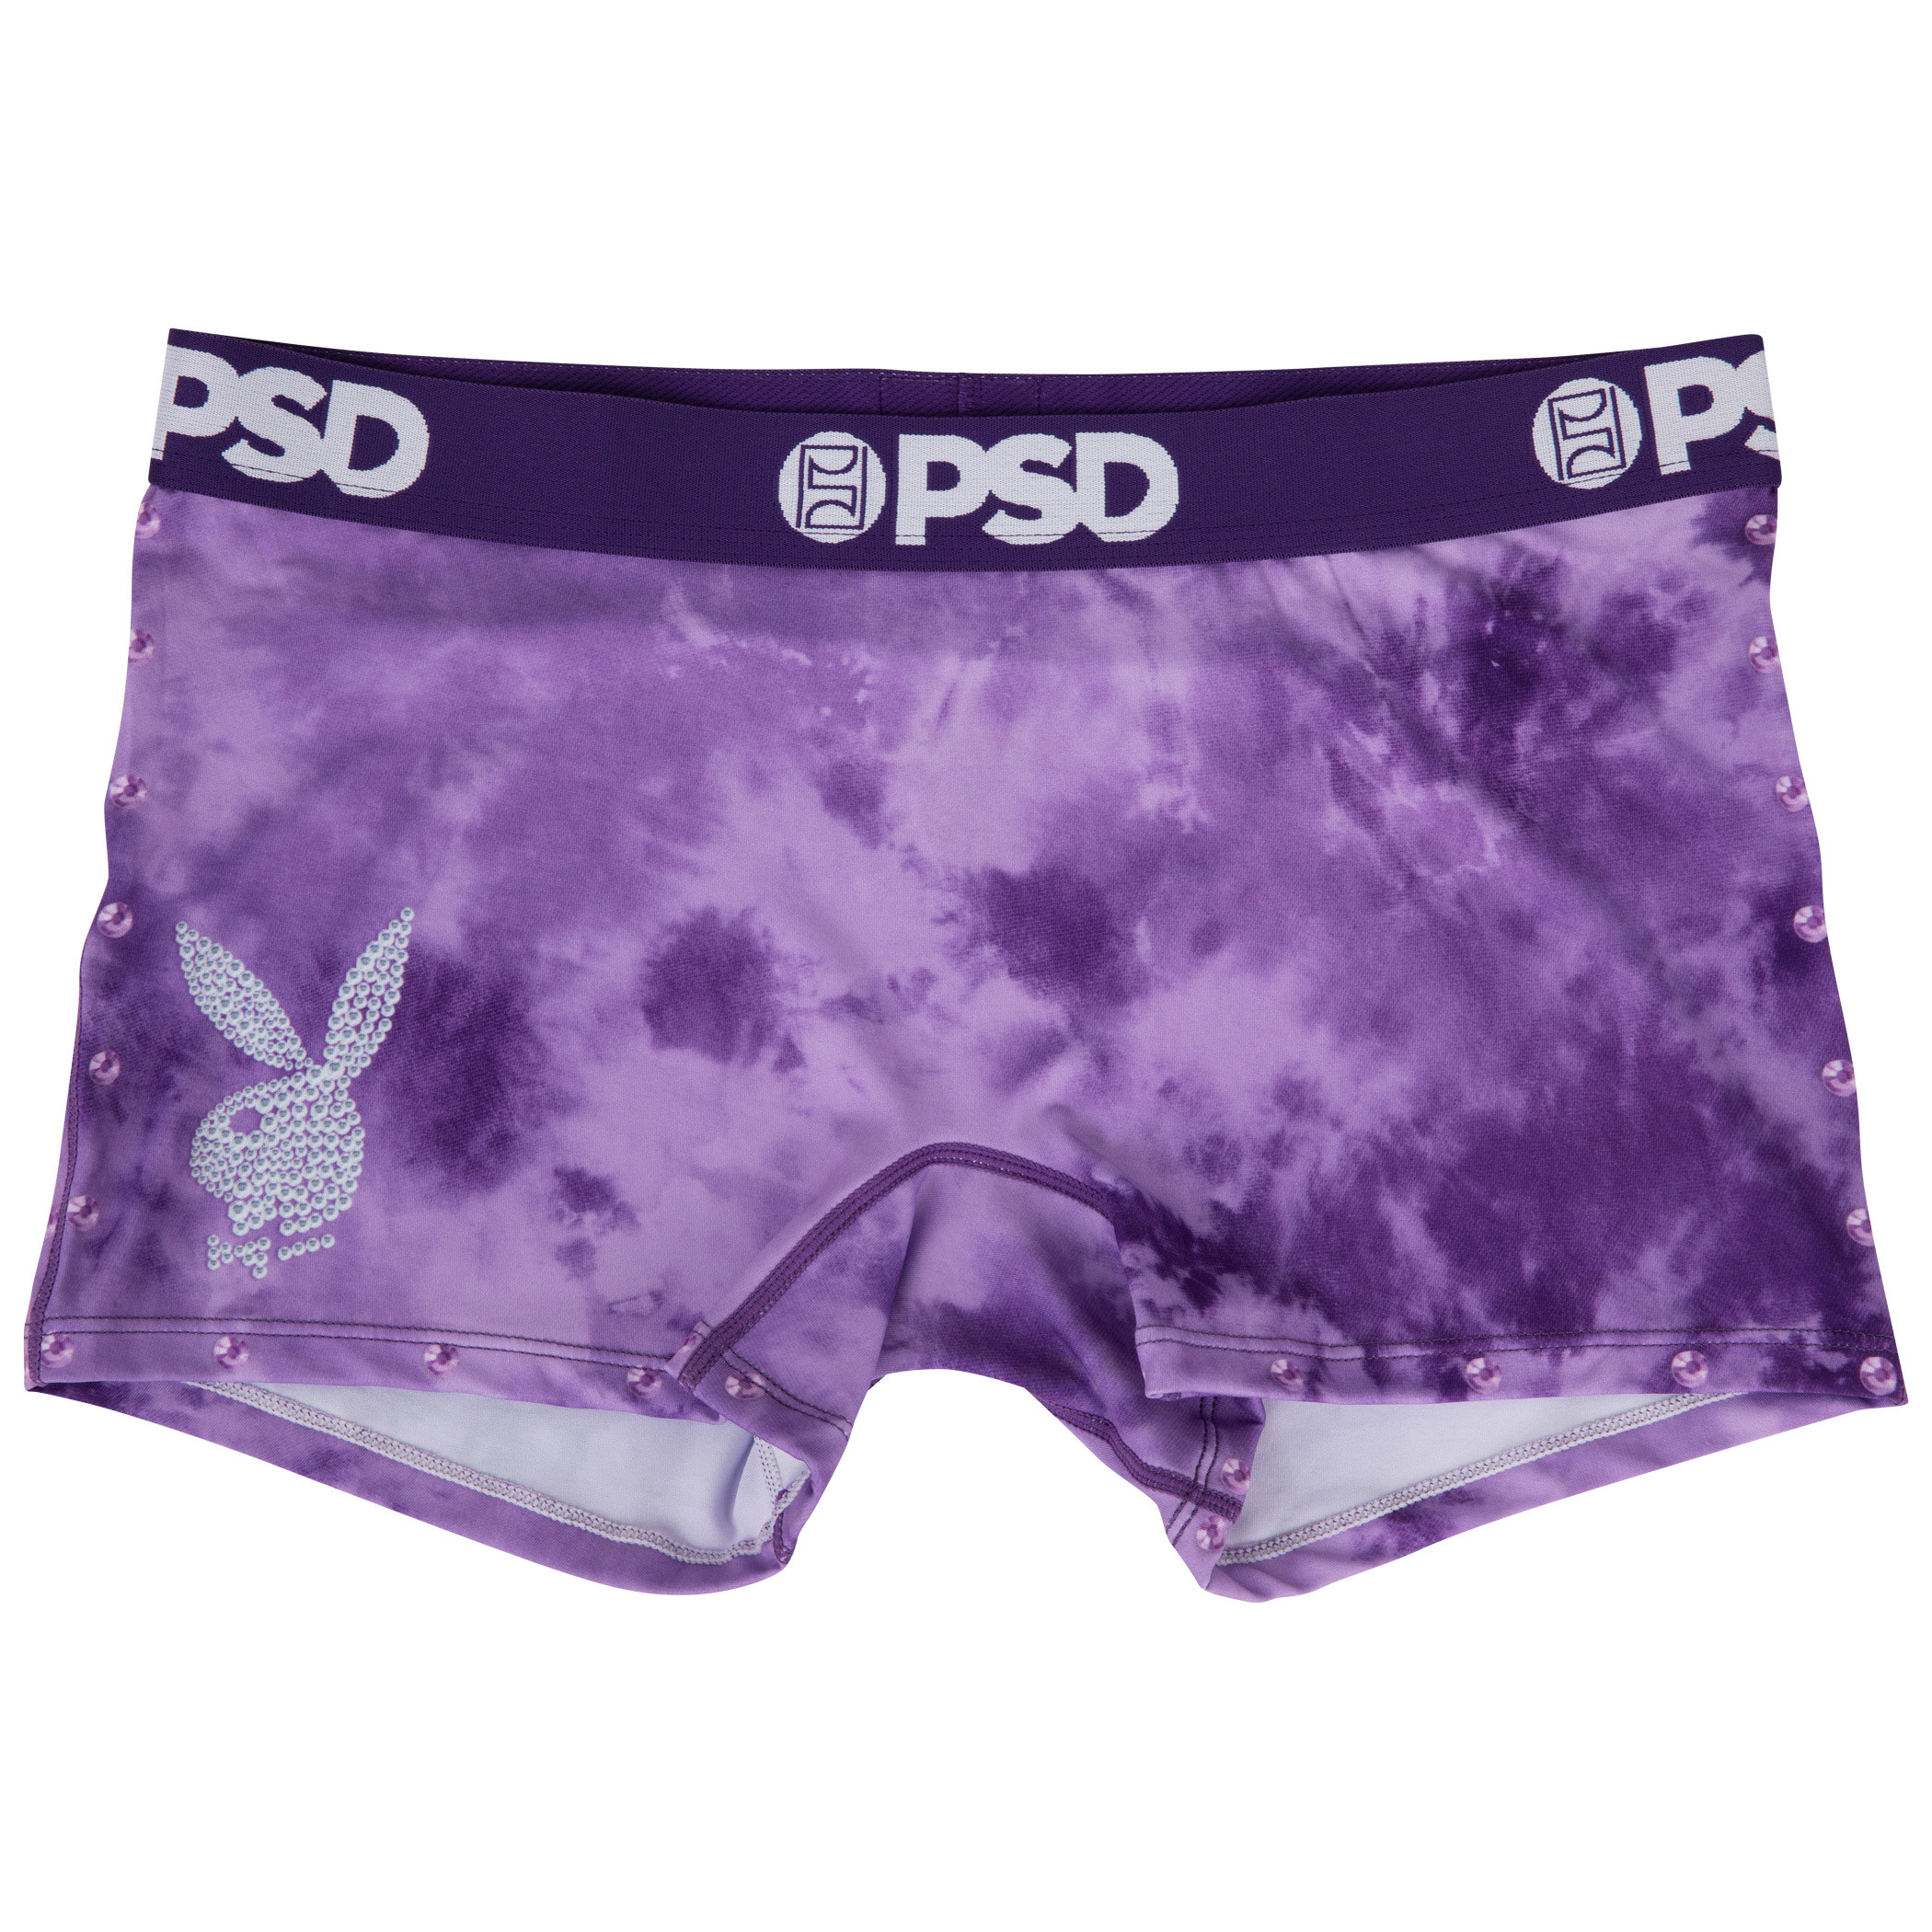 PSD Boyshorts (Purple/Playboy Spiral Dye Boy Short) Women's